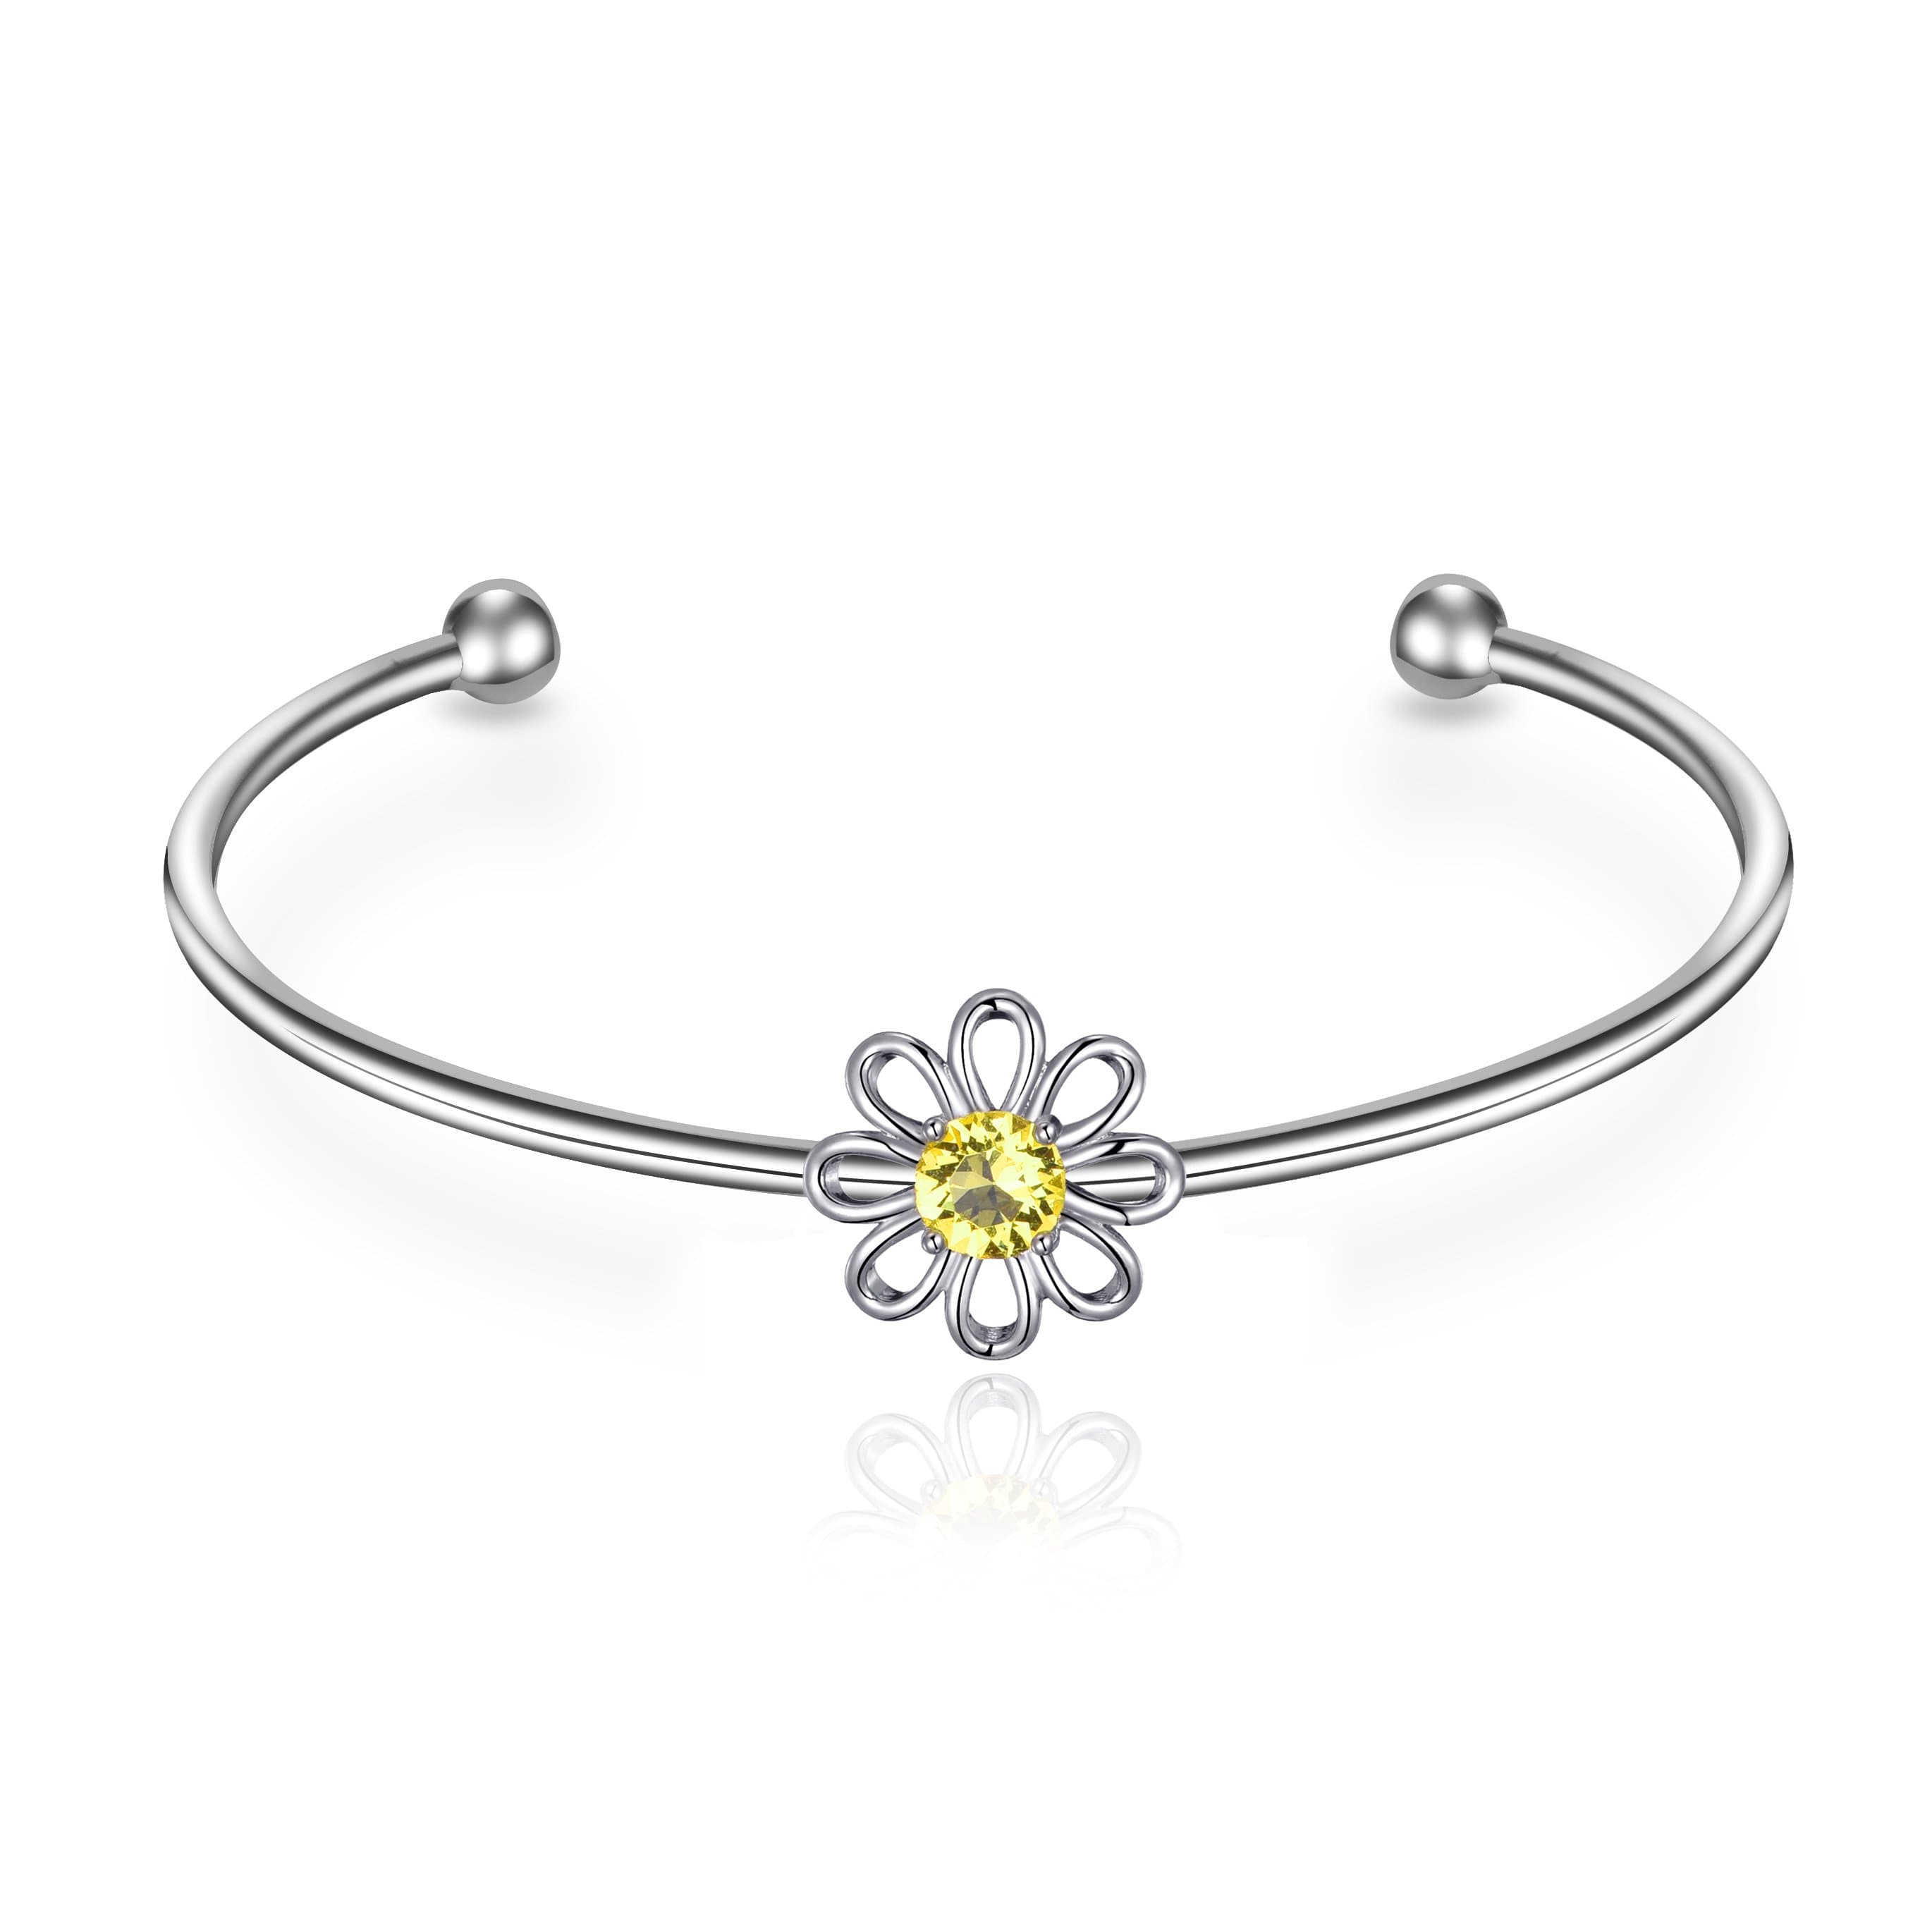 Daisy Crystal Cuff Bangle Created with Zircondia® Crystals by Philip Jones Jewellery